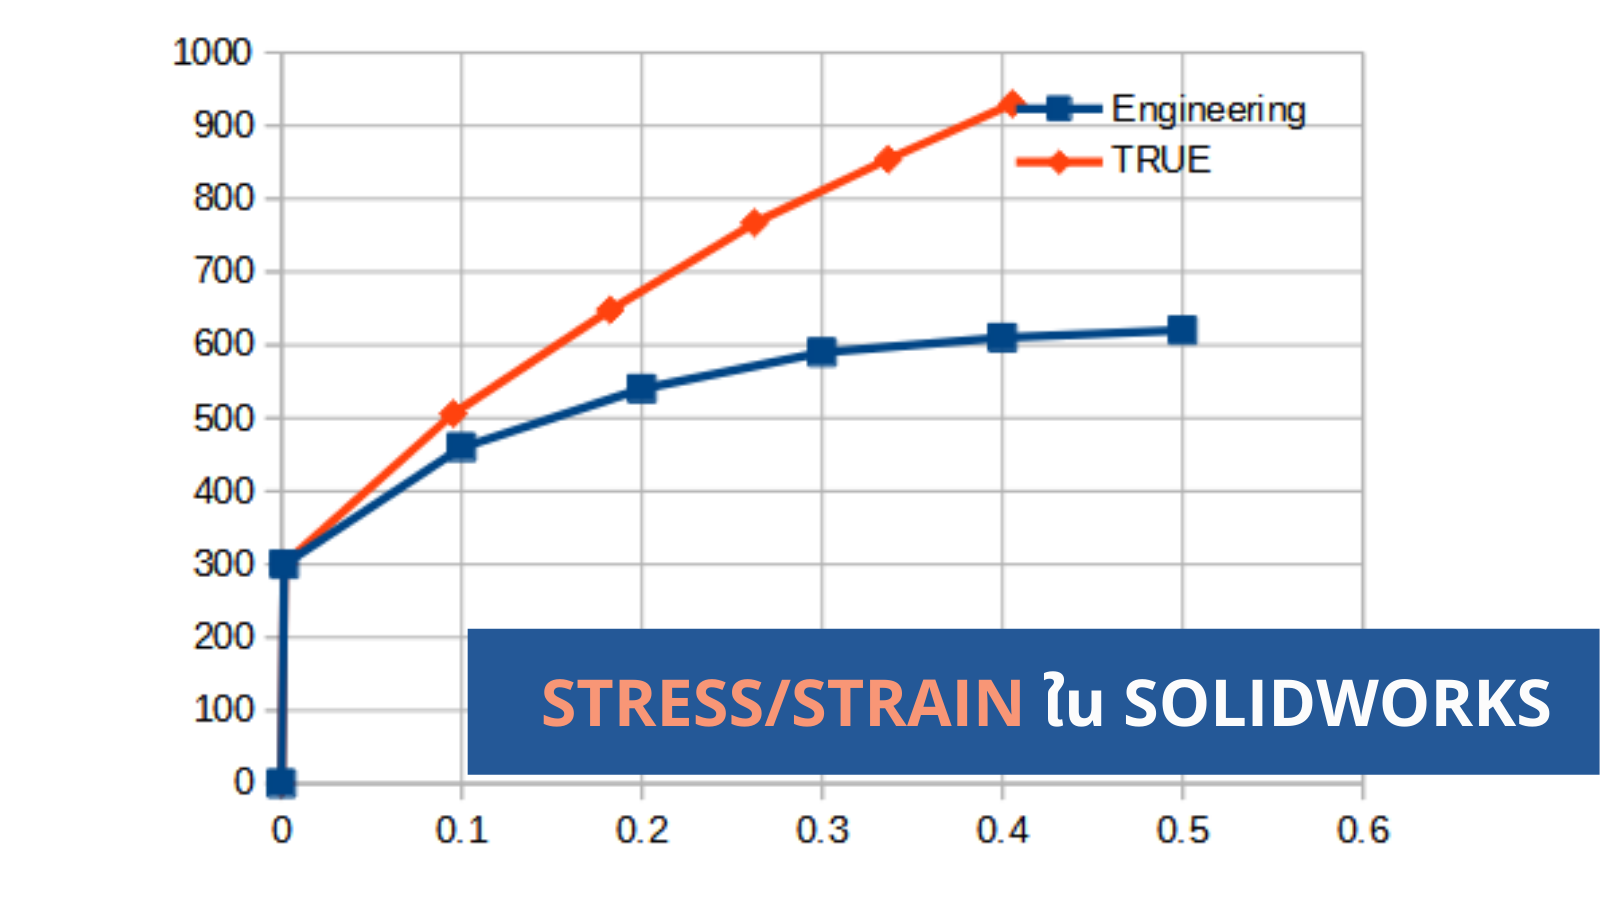 Stress Strain Data in SOLIDWORKS Simulation1